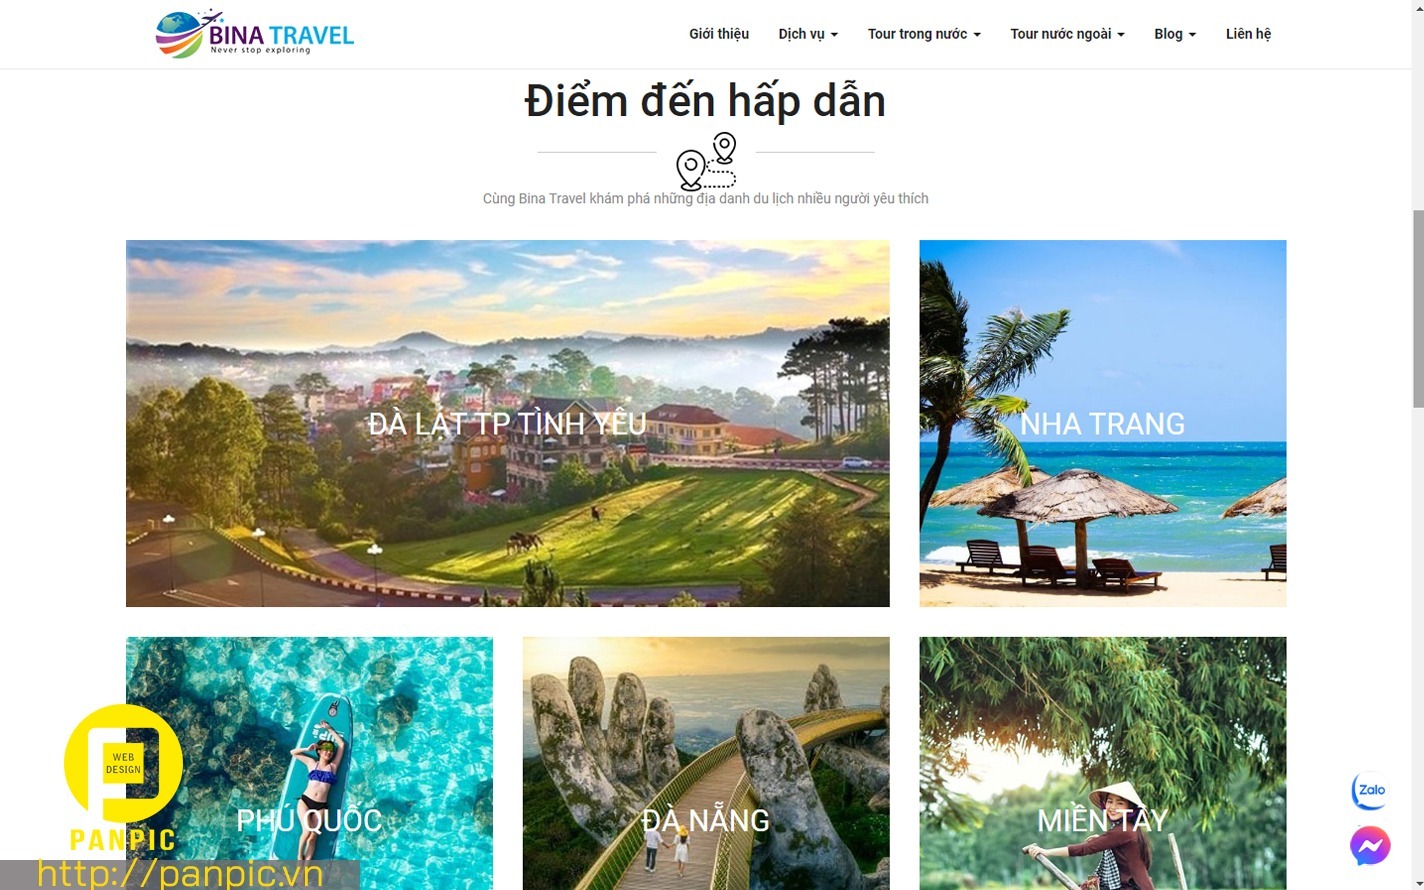 Panpic designed the website for Bina Travel travel company